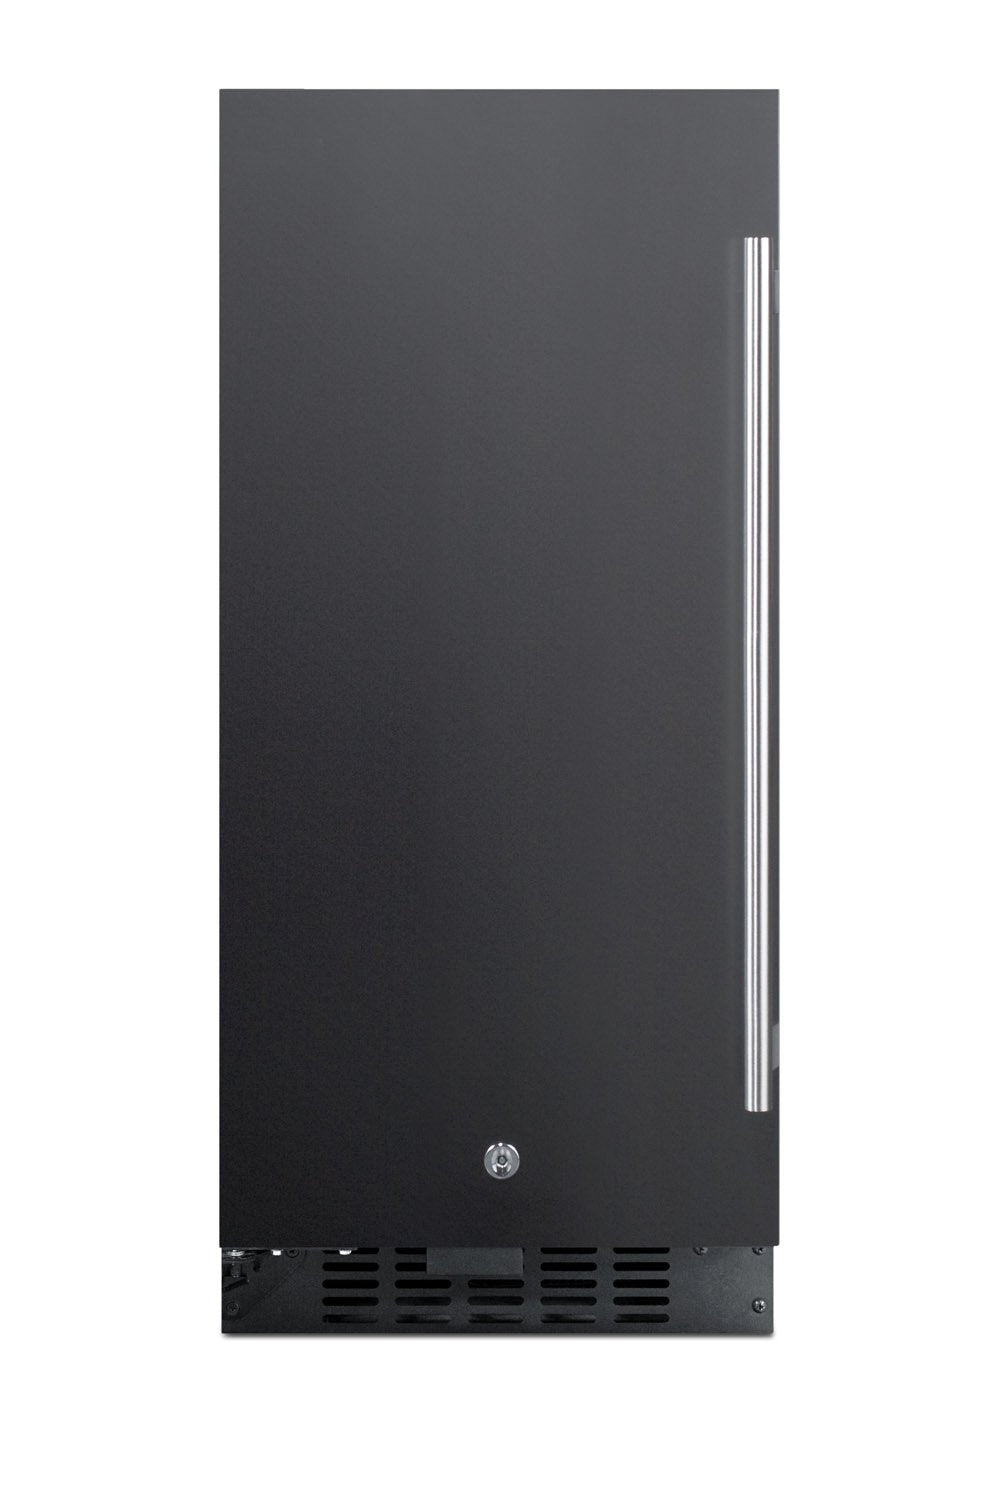 SUMMIT 15" Wide Built-In All-Refrigerator (FF1532B)